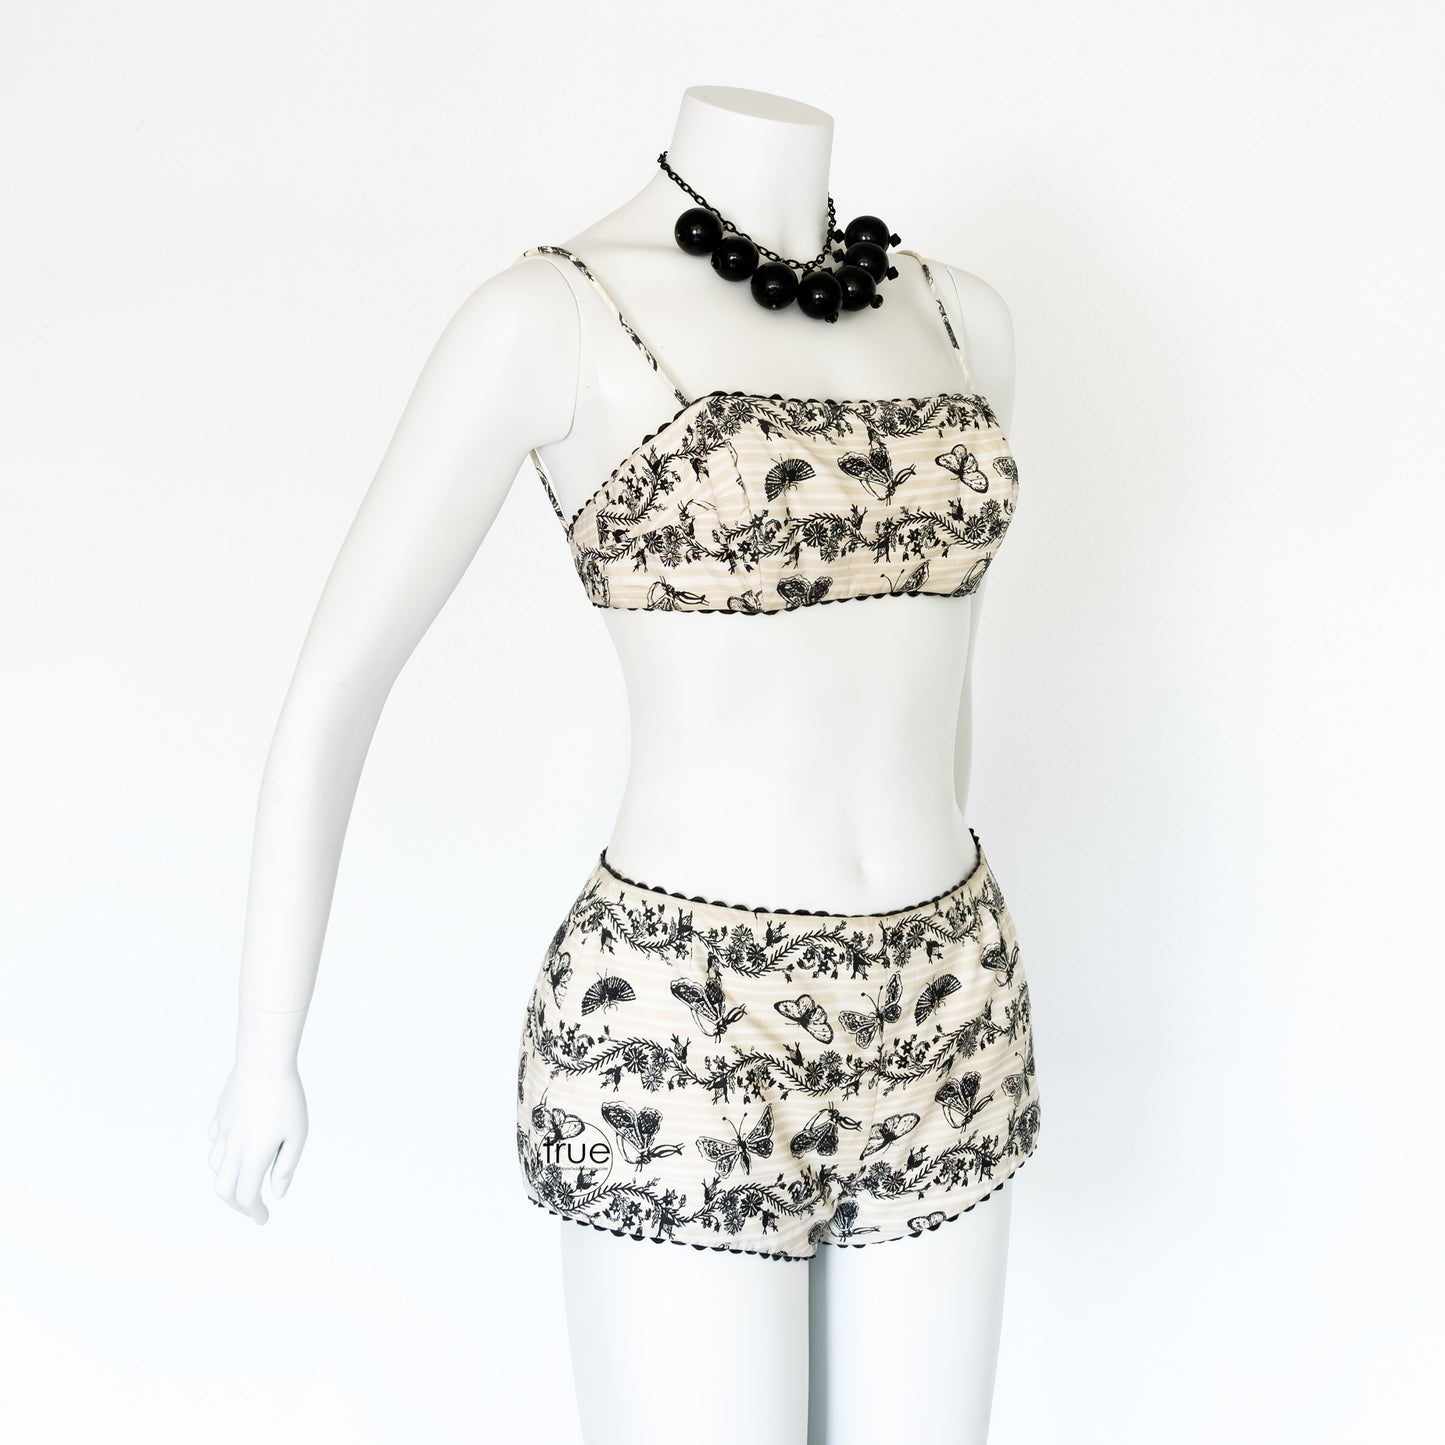 vintage 1950's swimsuit playsuit ...rare nornie LANZ original butterfly print swimsuit playsuit